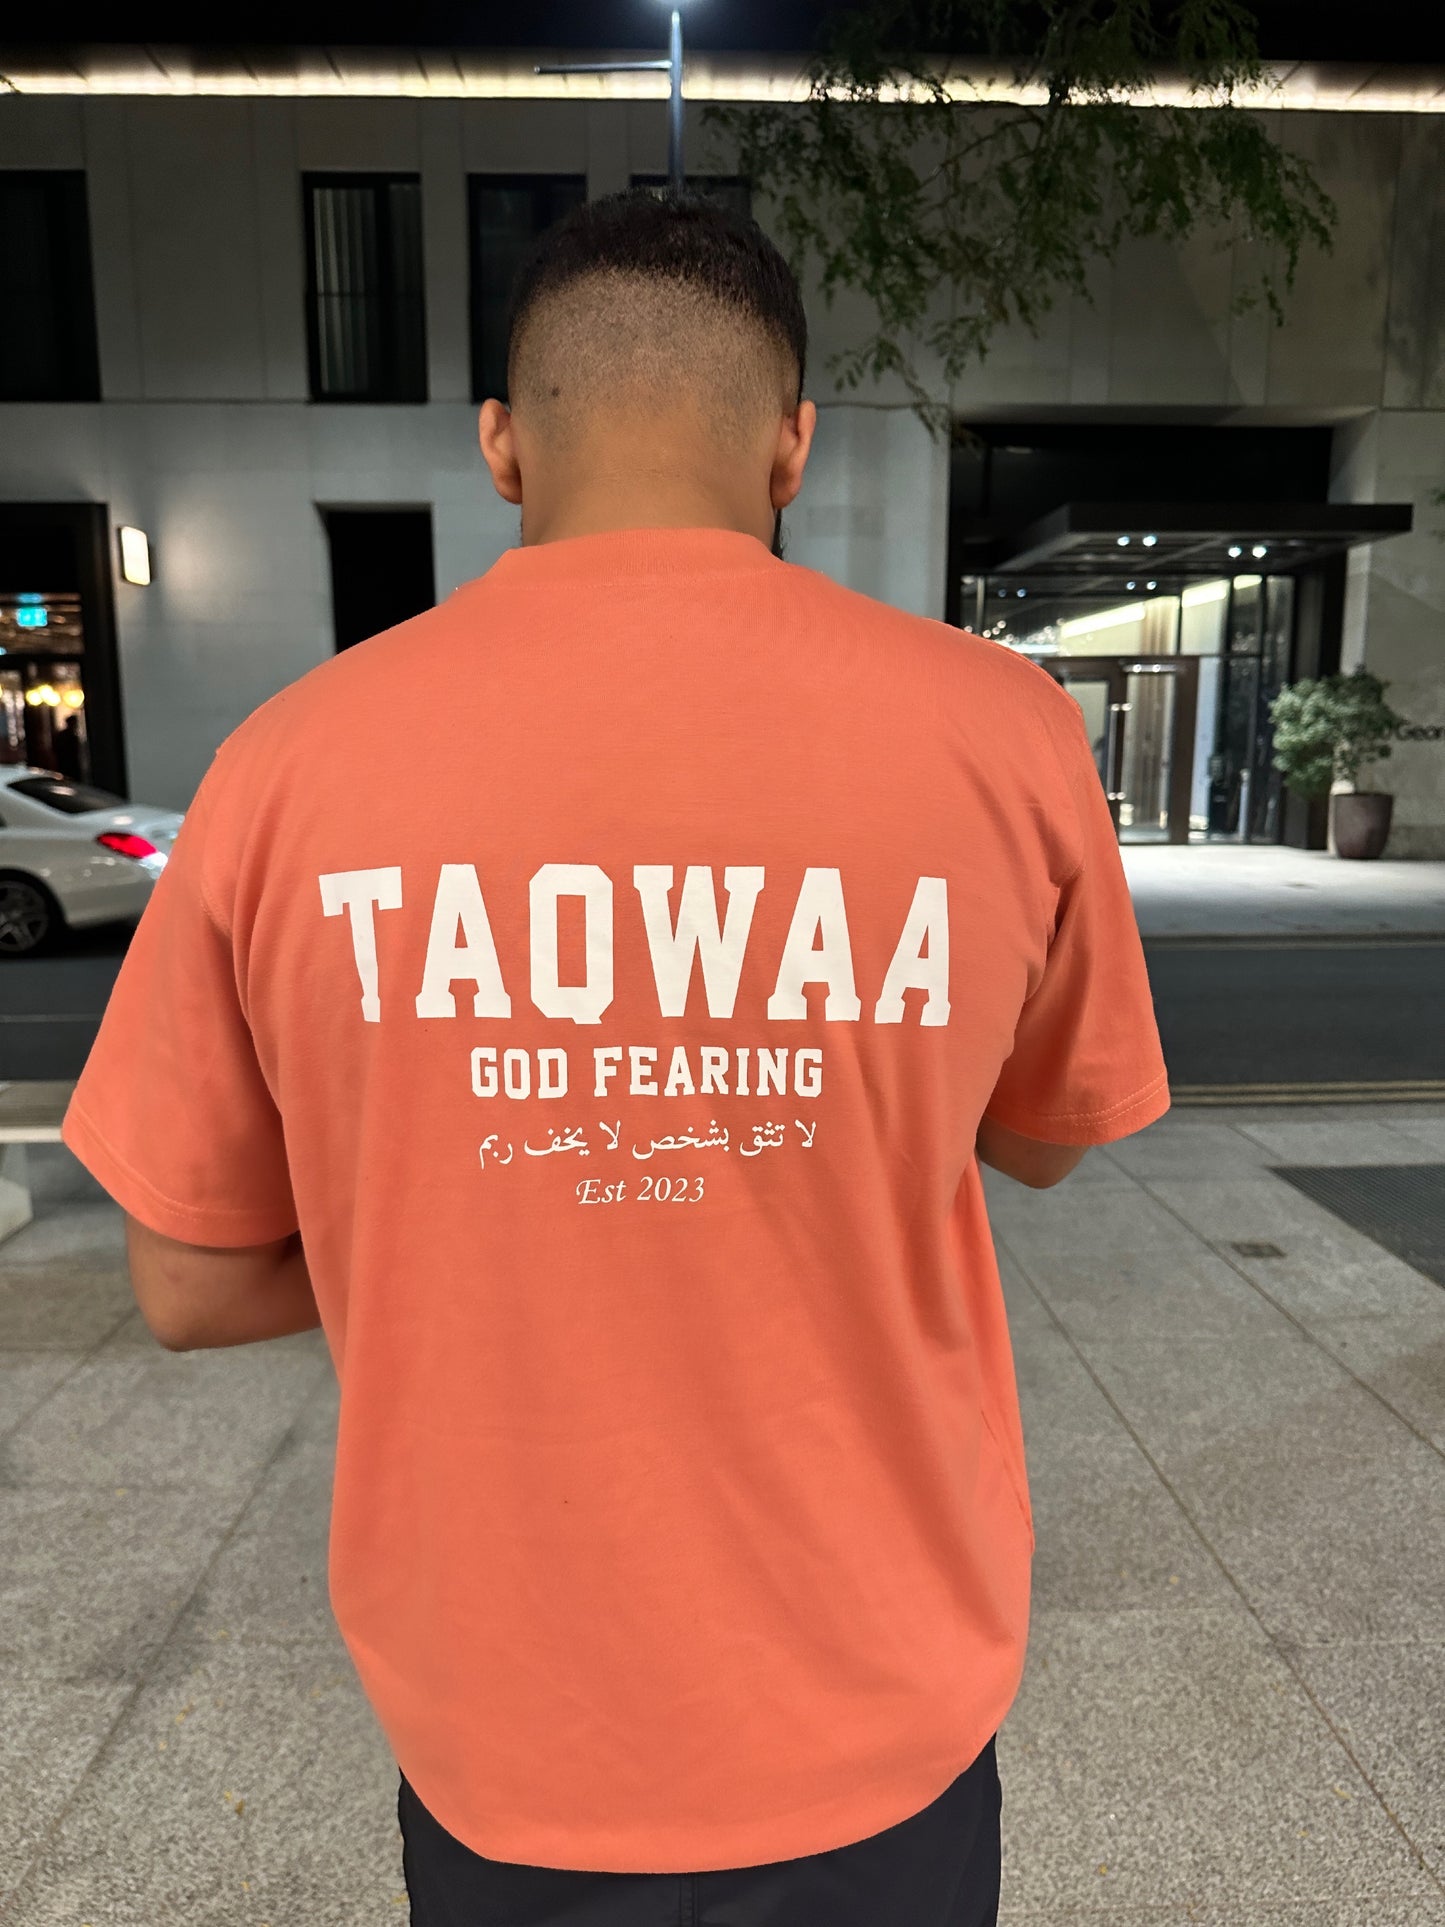 Oversized Taqwaa T-Shirt